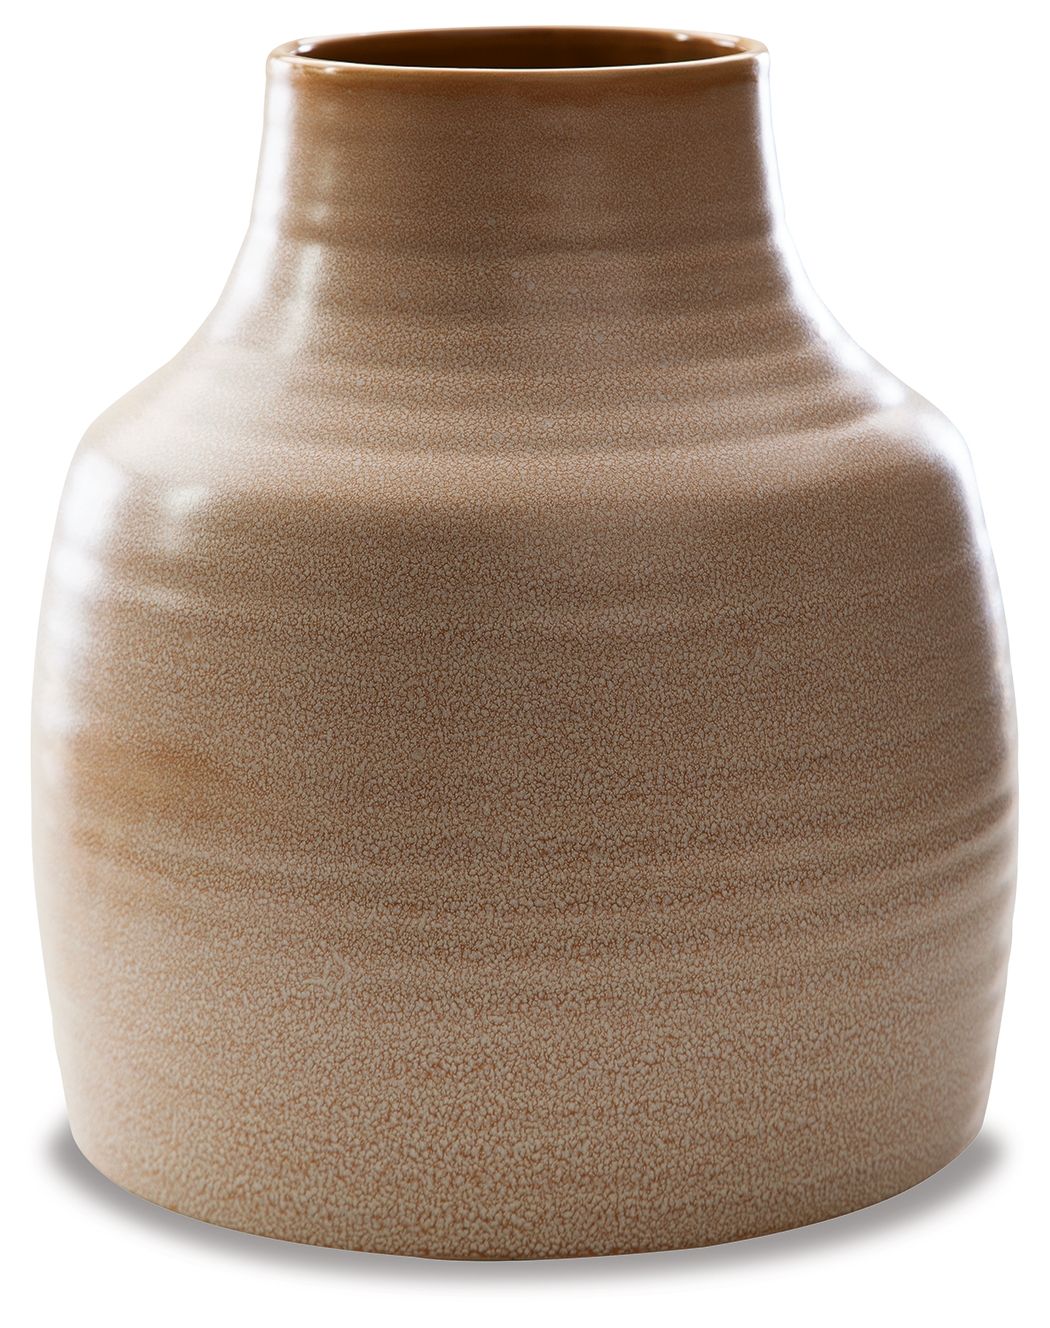 Millcott - Medium Vase - Tony's Home Furnishings